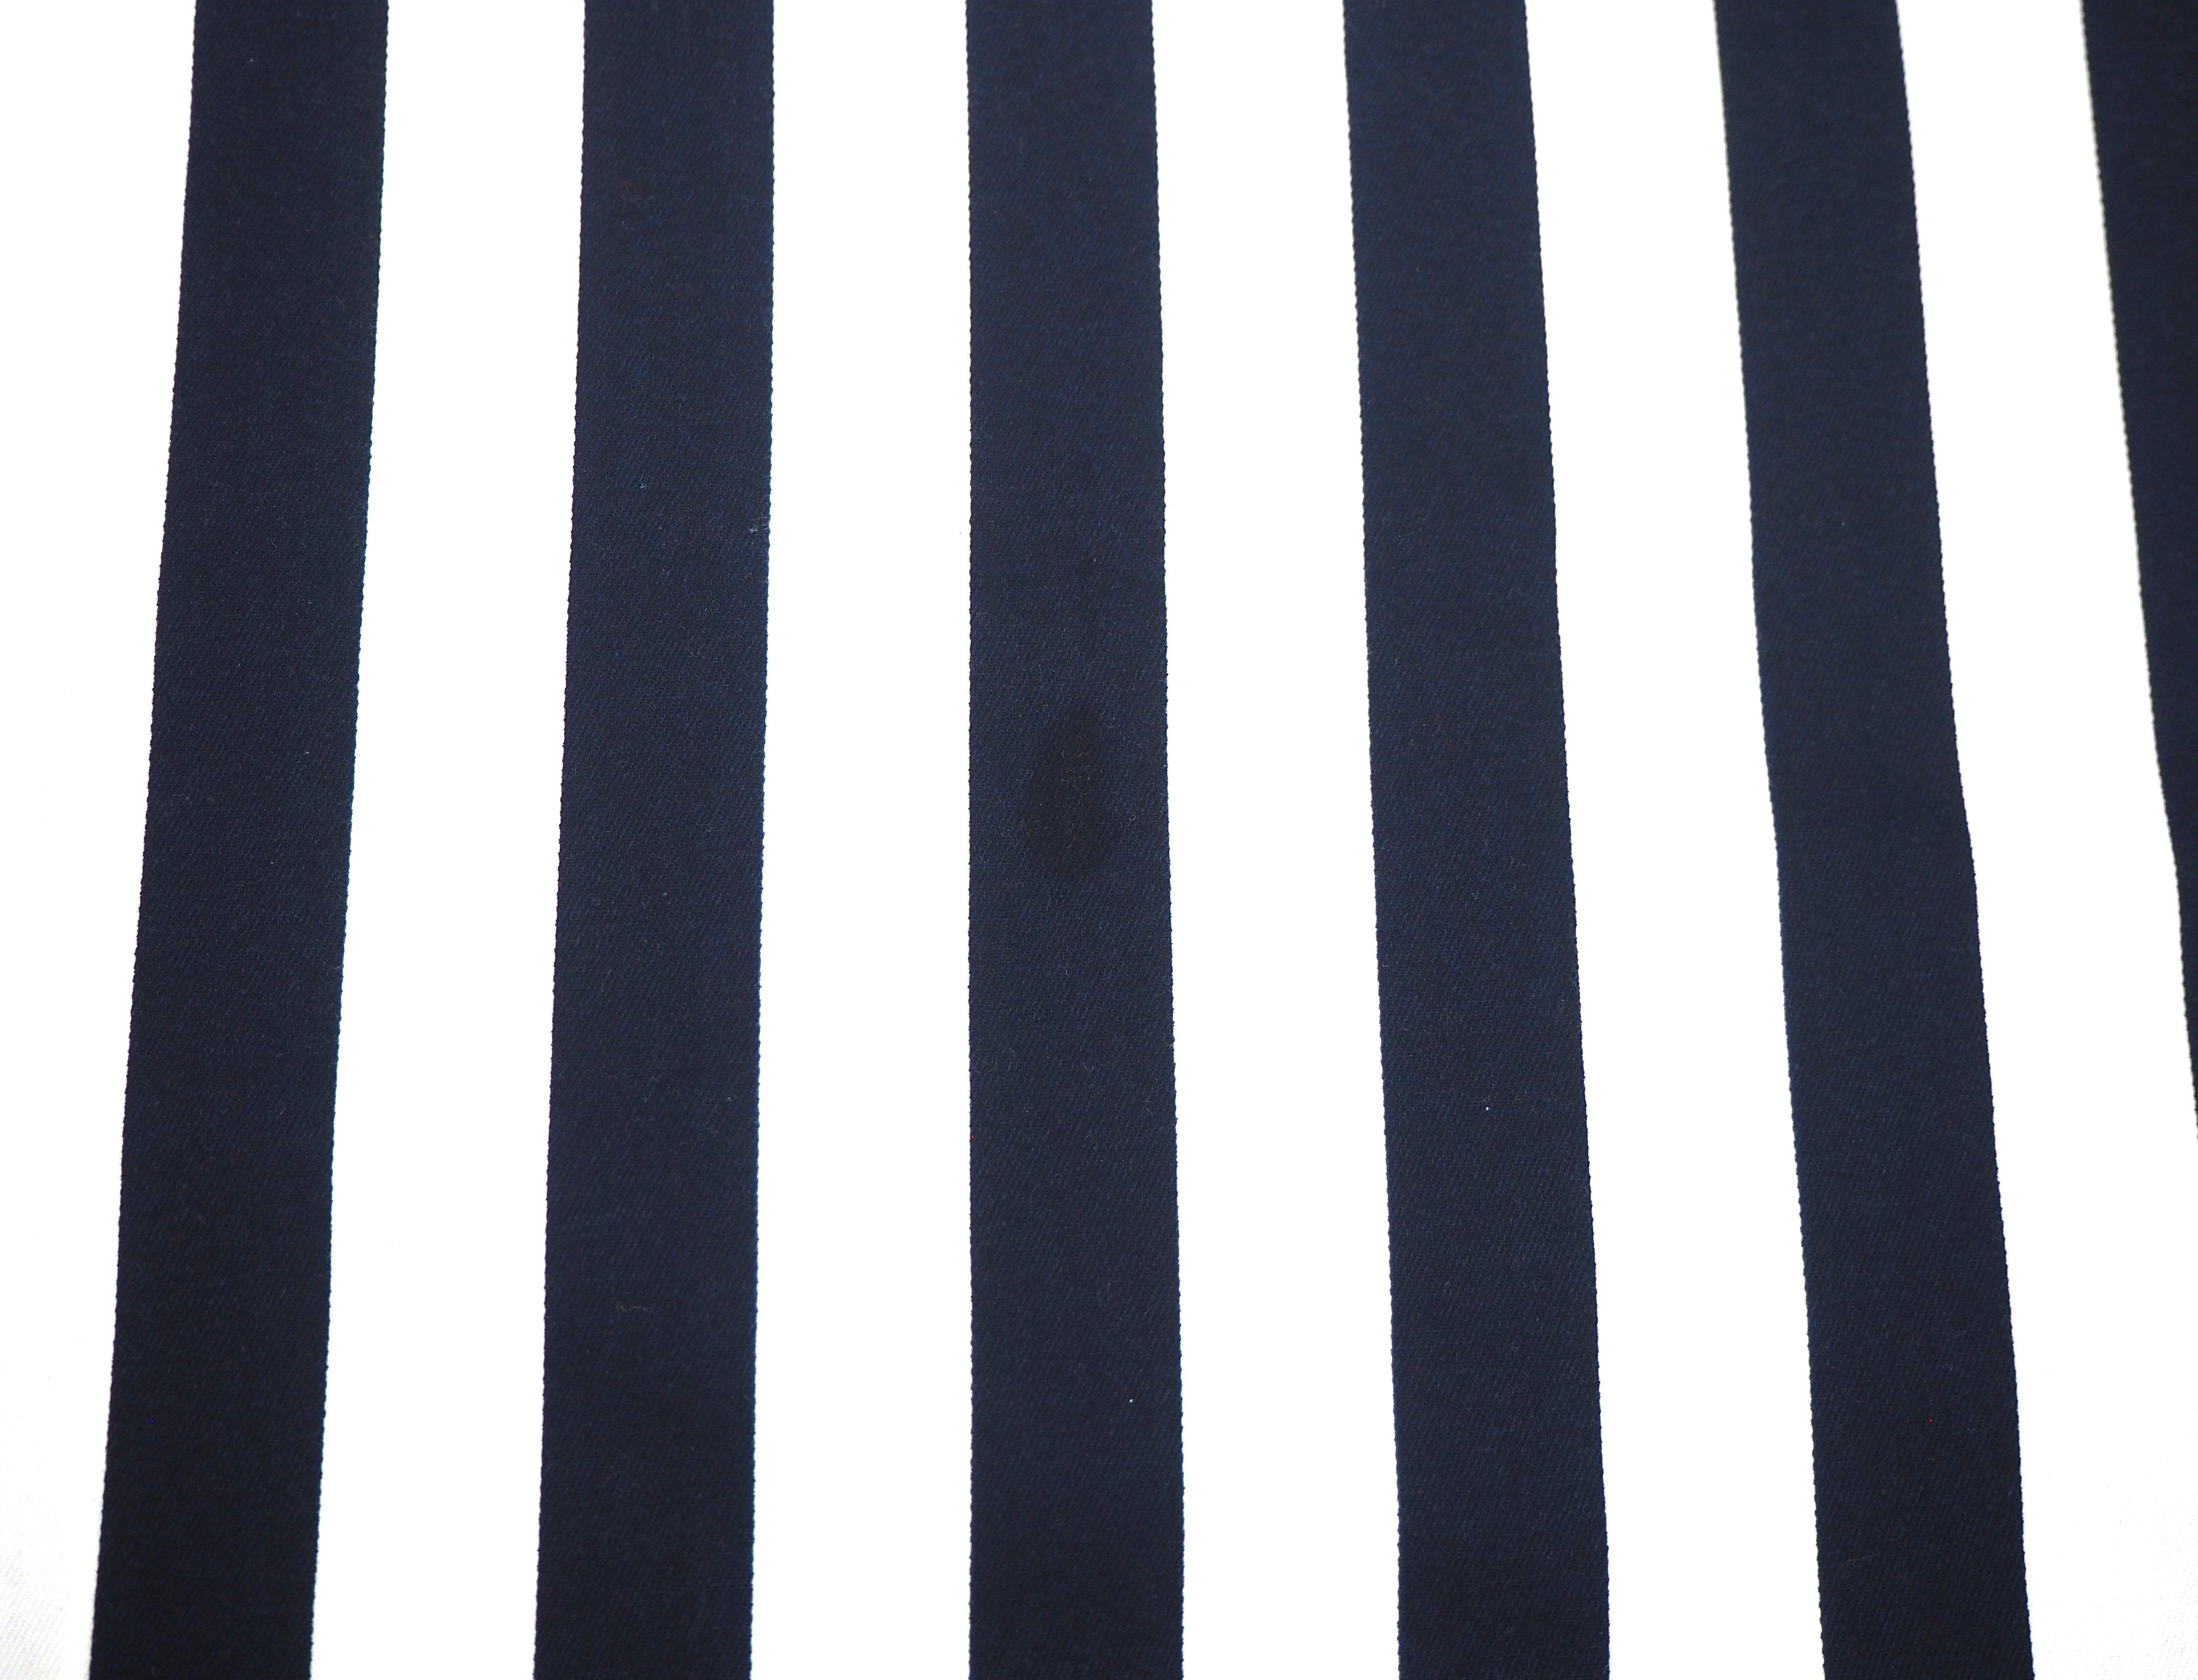 Classic Navy & White stripe print, 100% cotton fabric